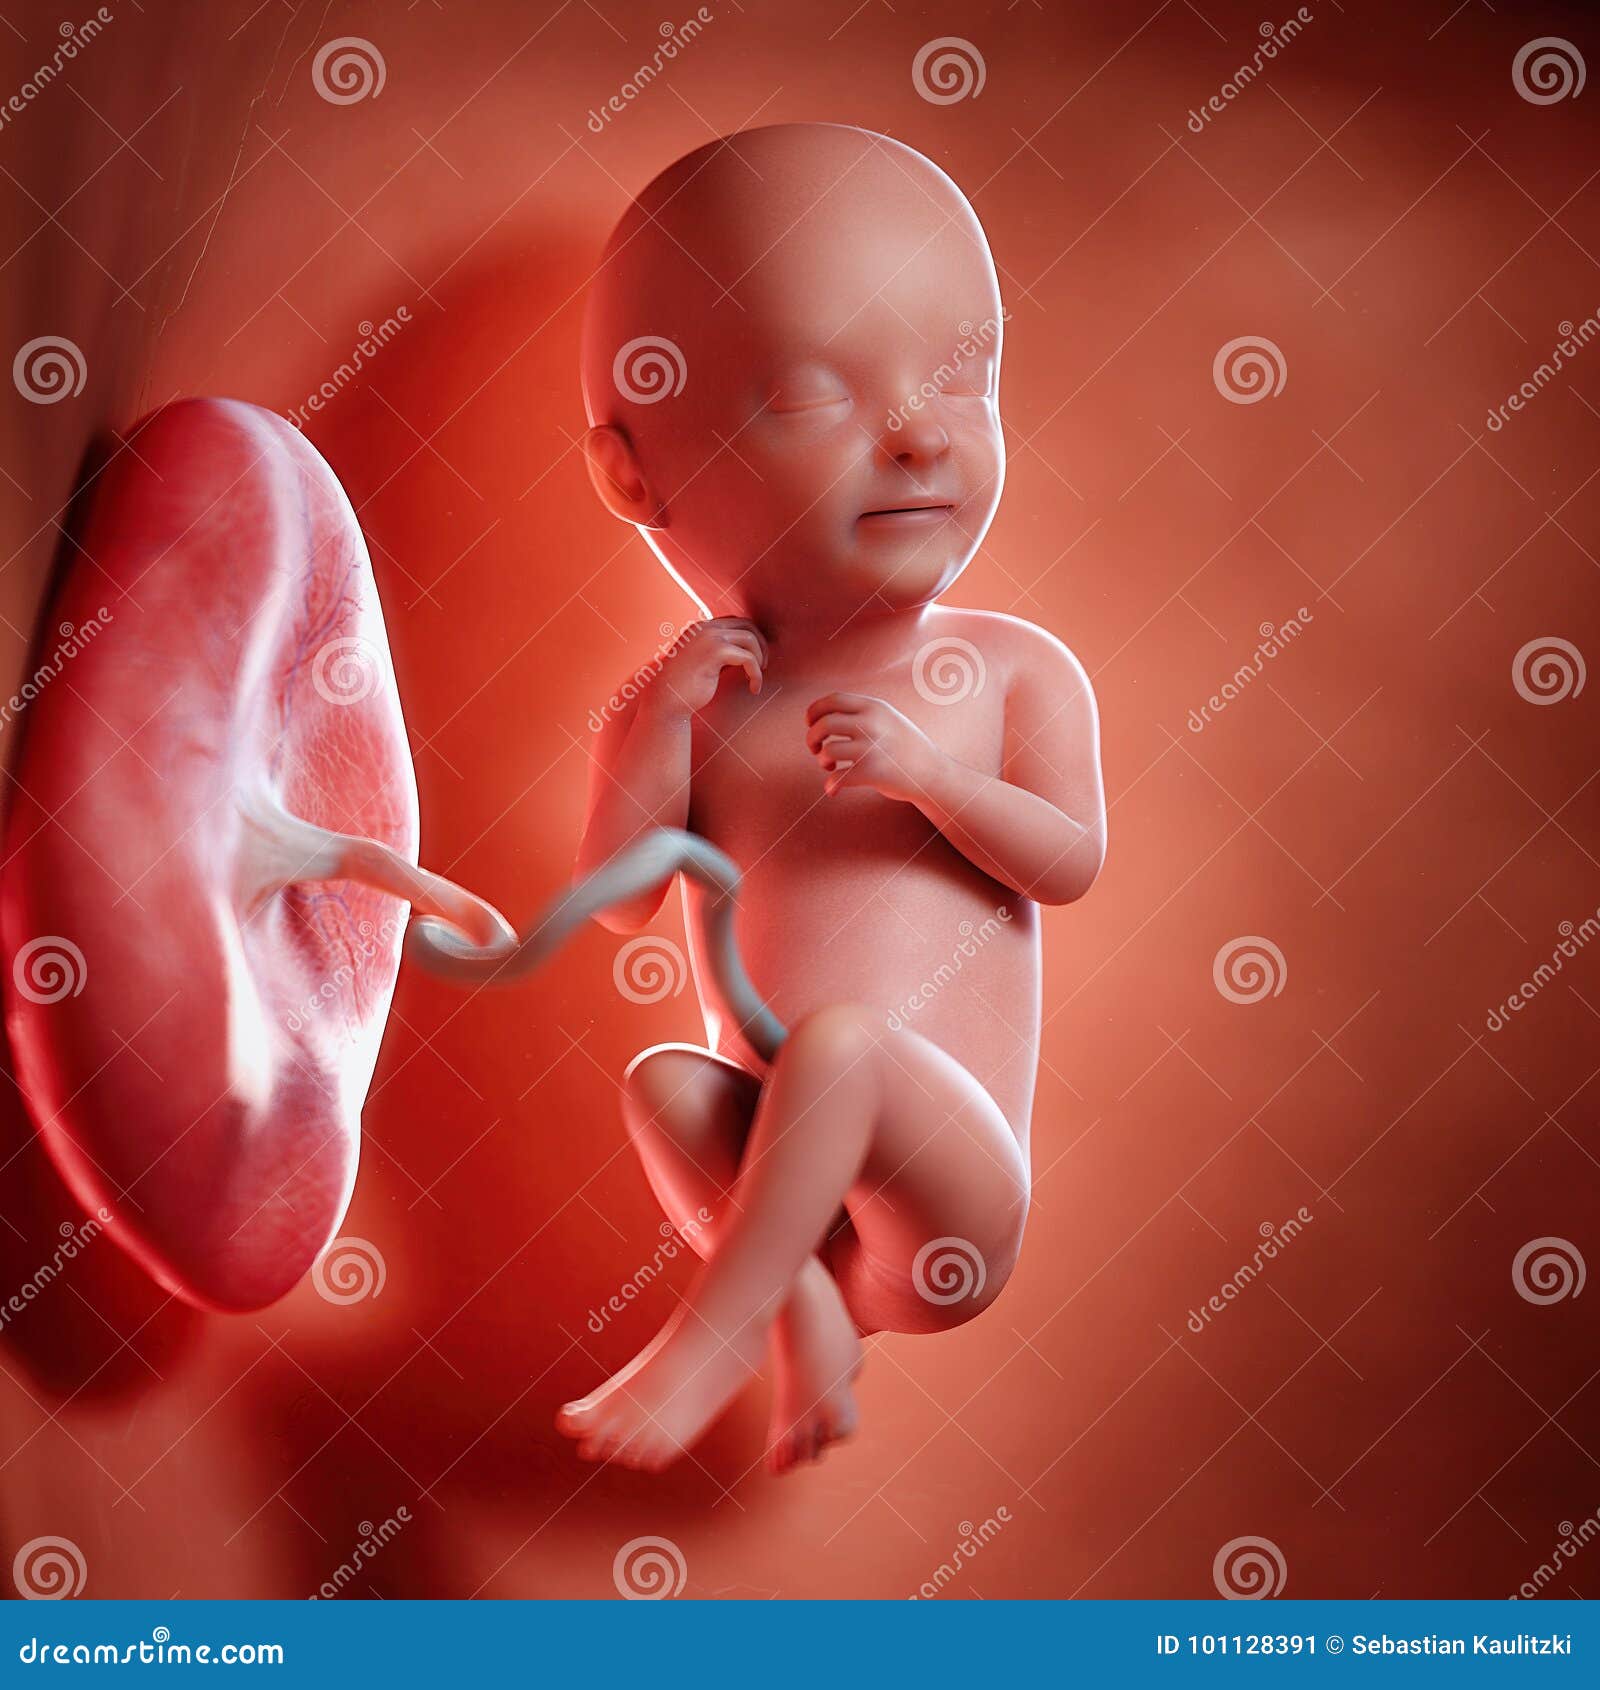 a fetus week 33